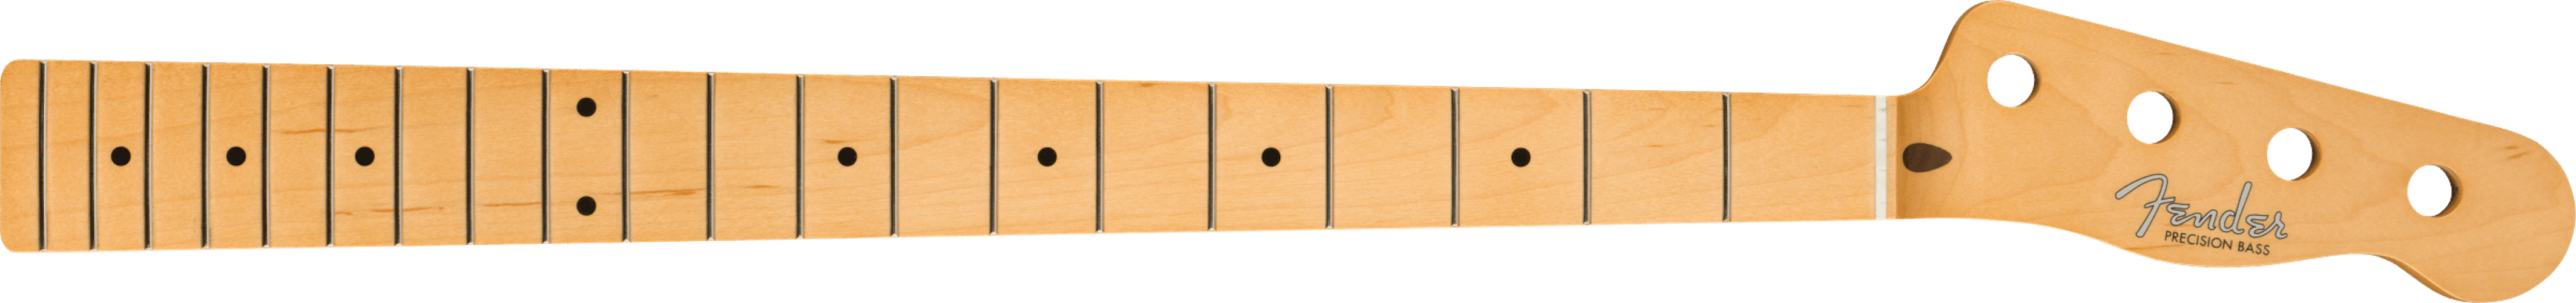 Fender '51 P Bass Neck, "U"-Shaped Profile, 20 Med Jumbo Frets, 9.5", Maple